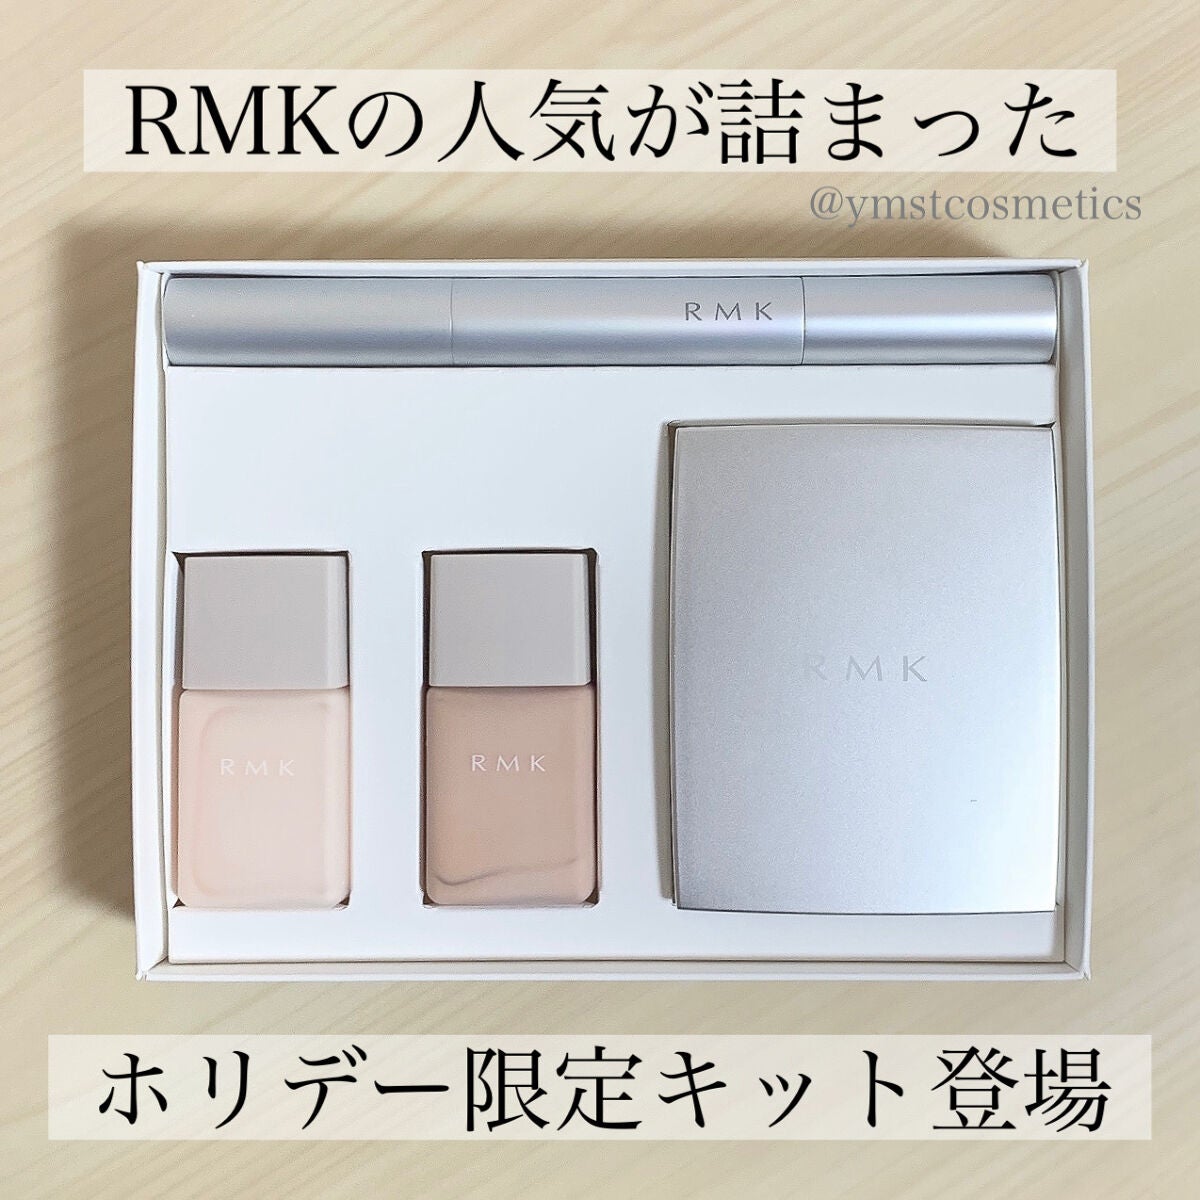 RMK ベースメイクキット - メイク道具・化粧小物